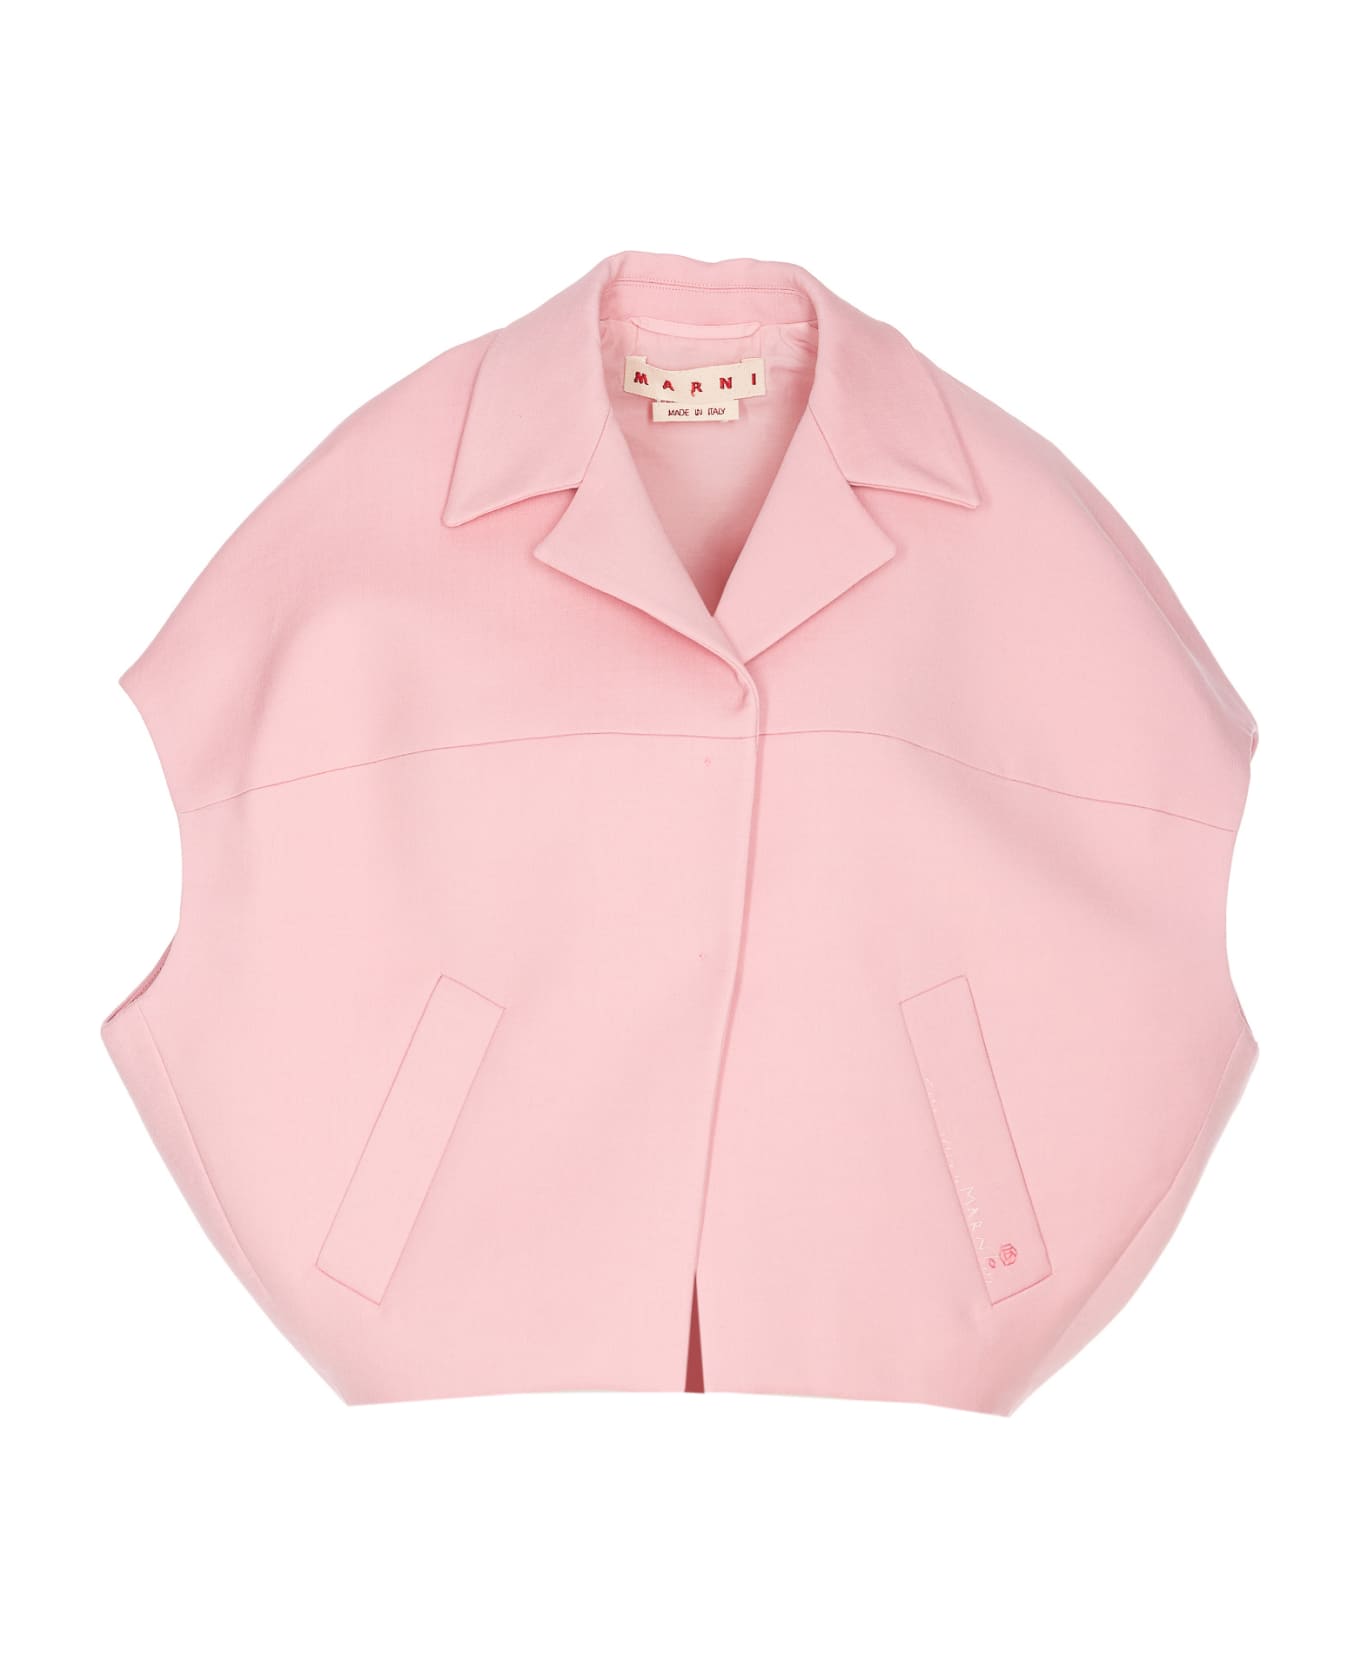 Marni Jacket - Pink ジャケット